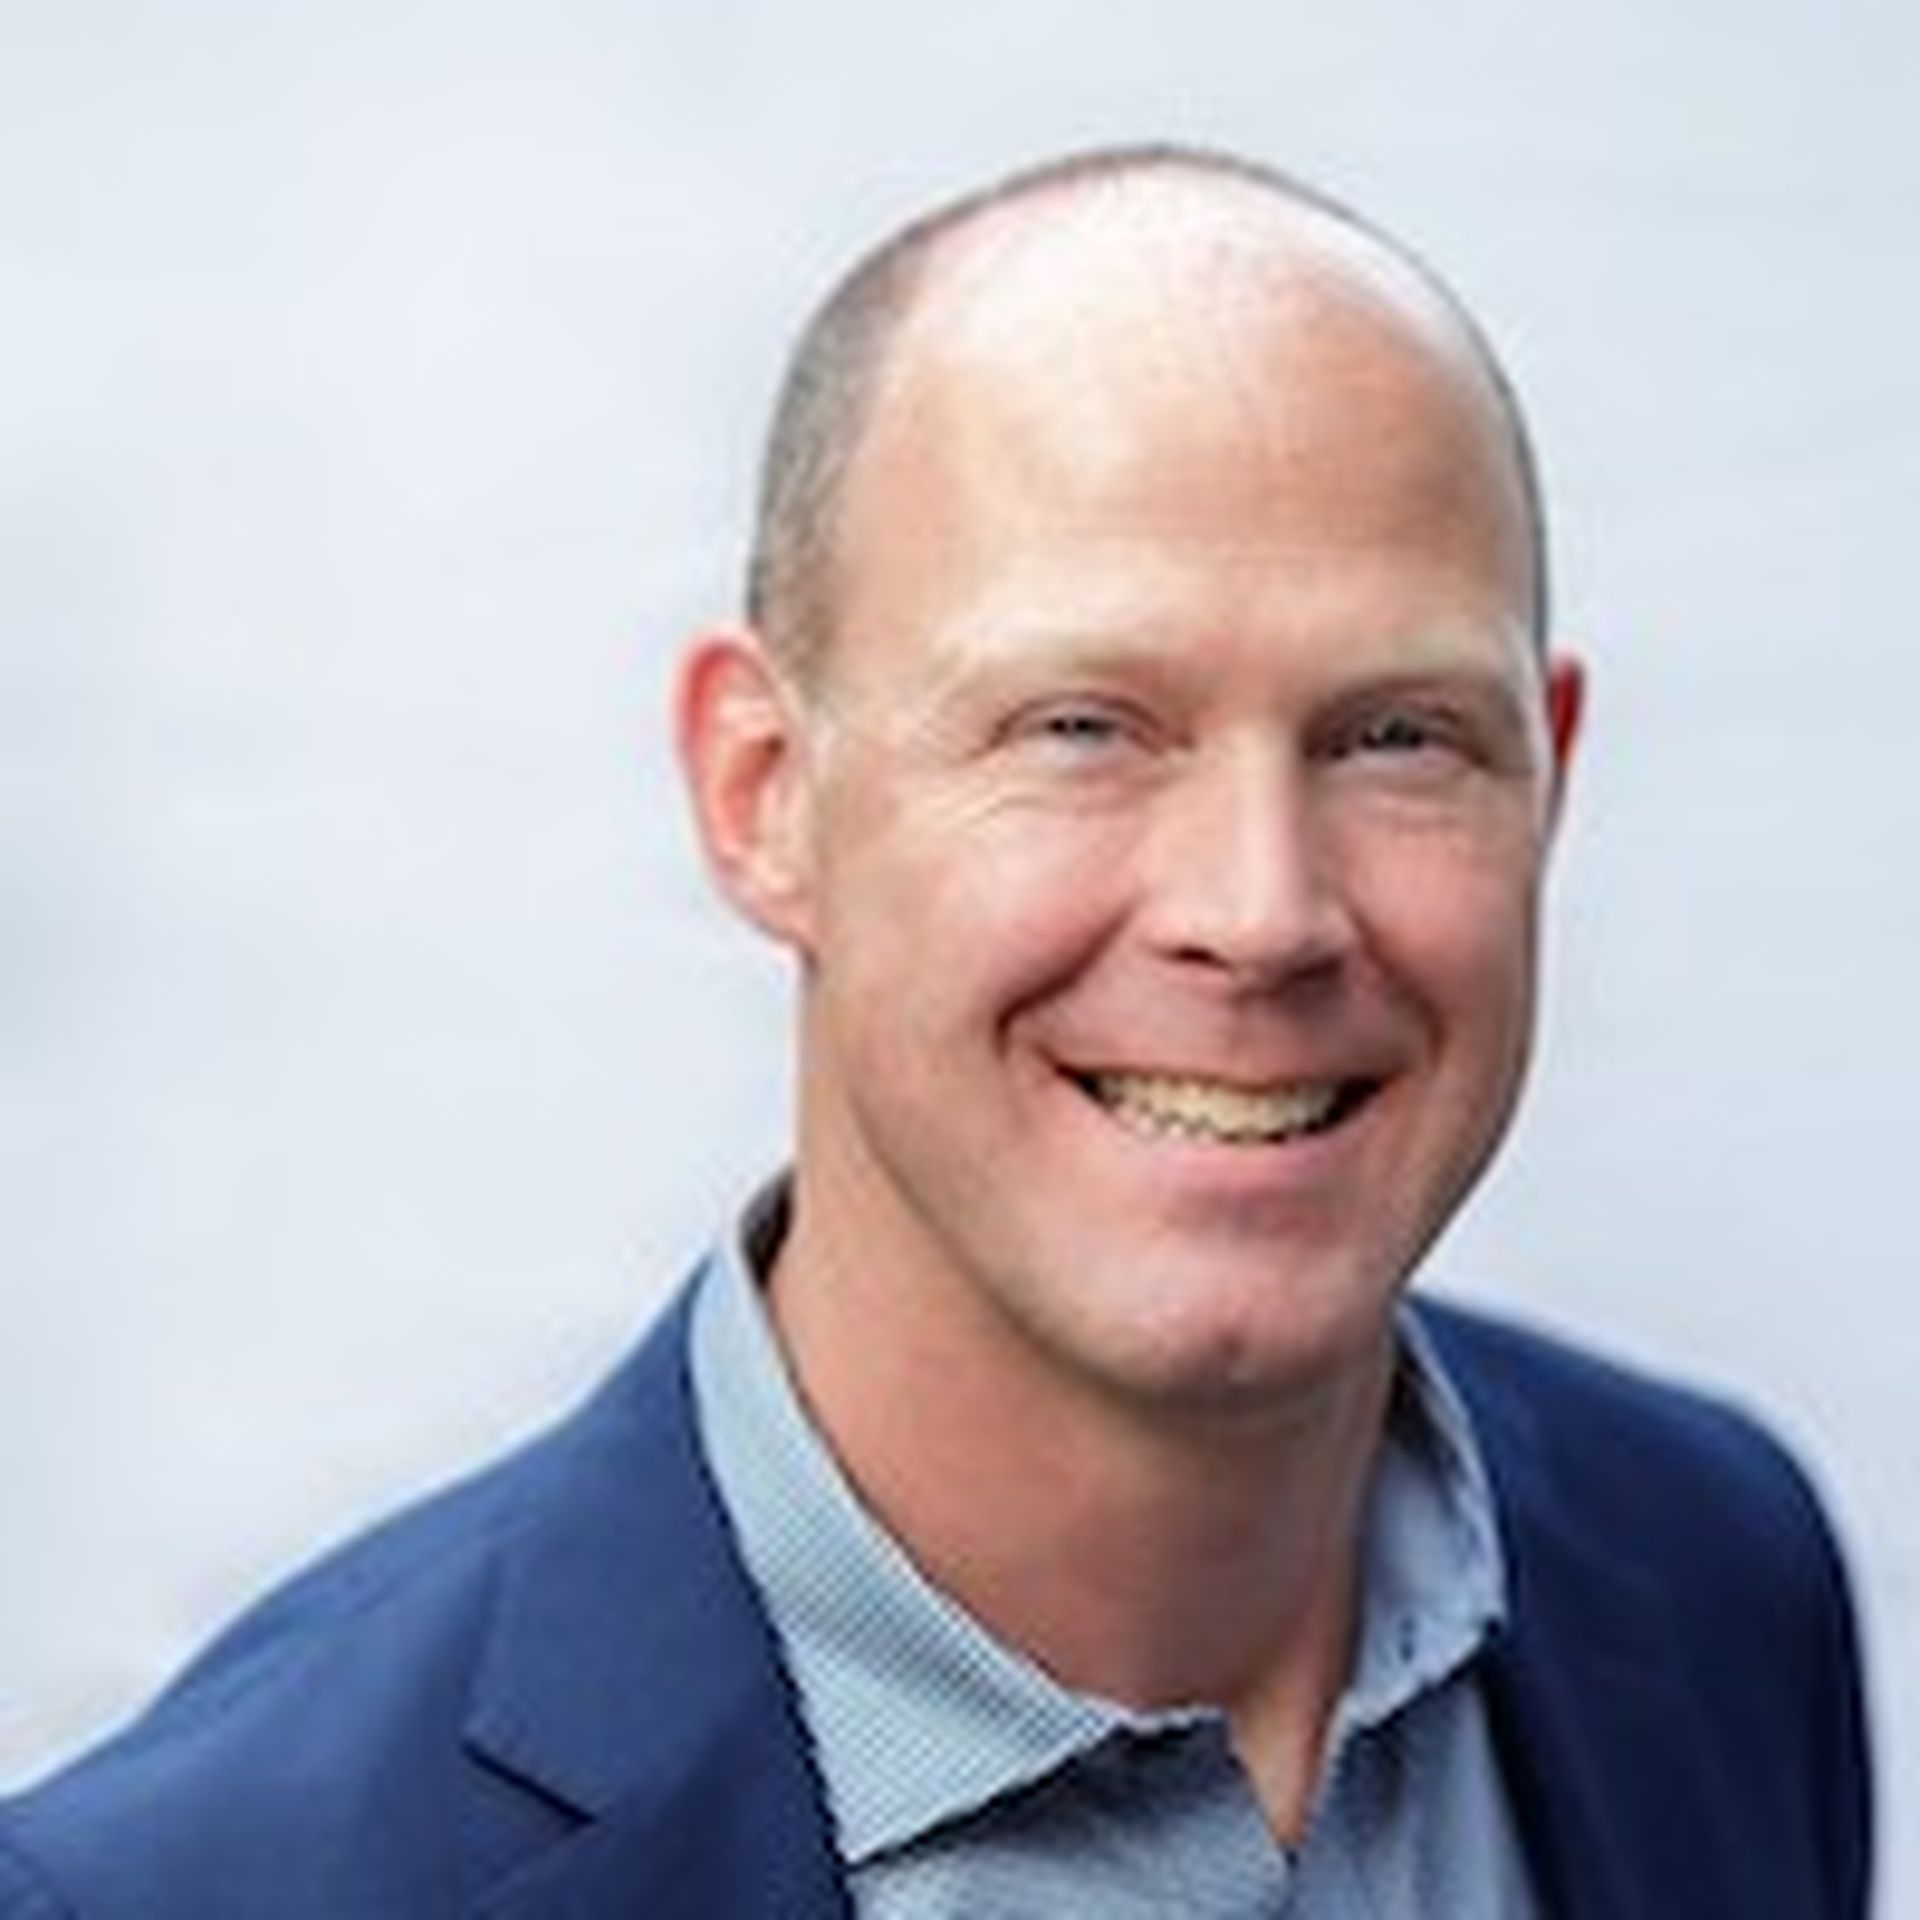 Marc van Zadelhoff, CEO, Devo